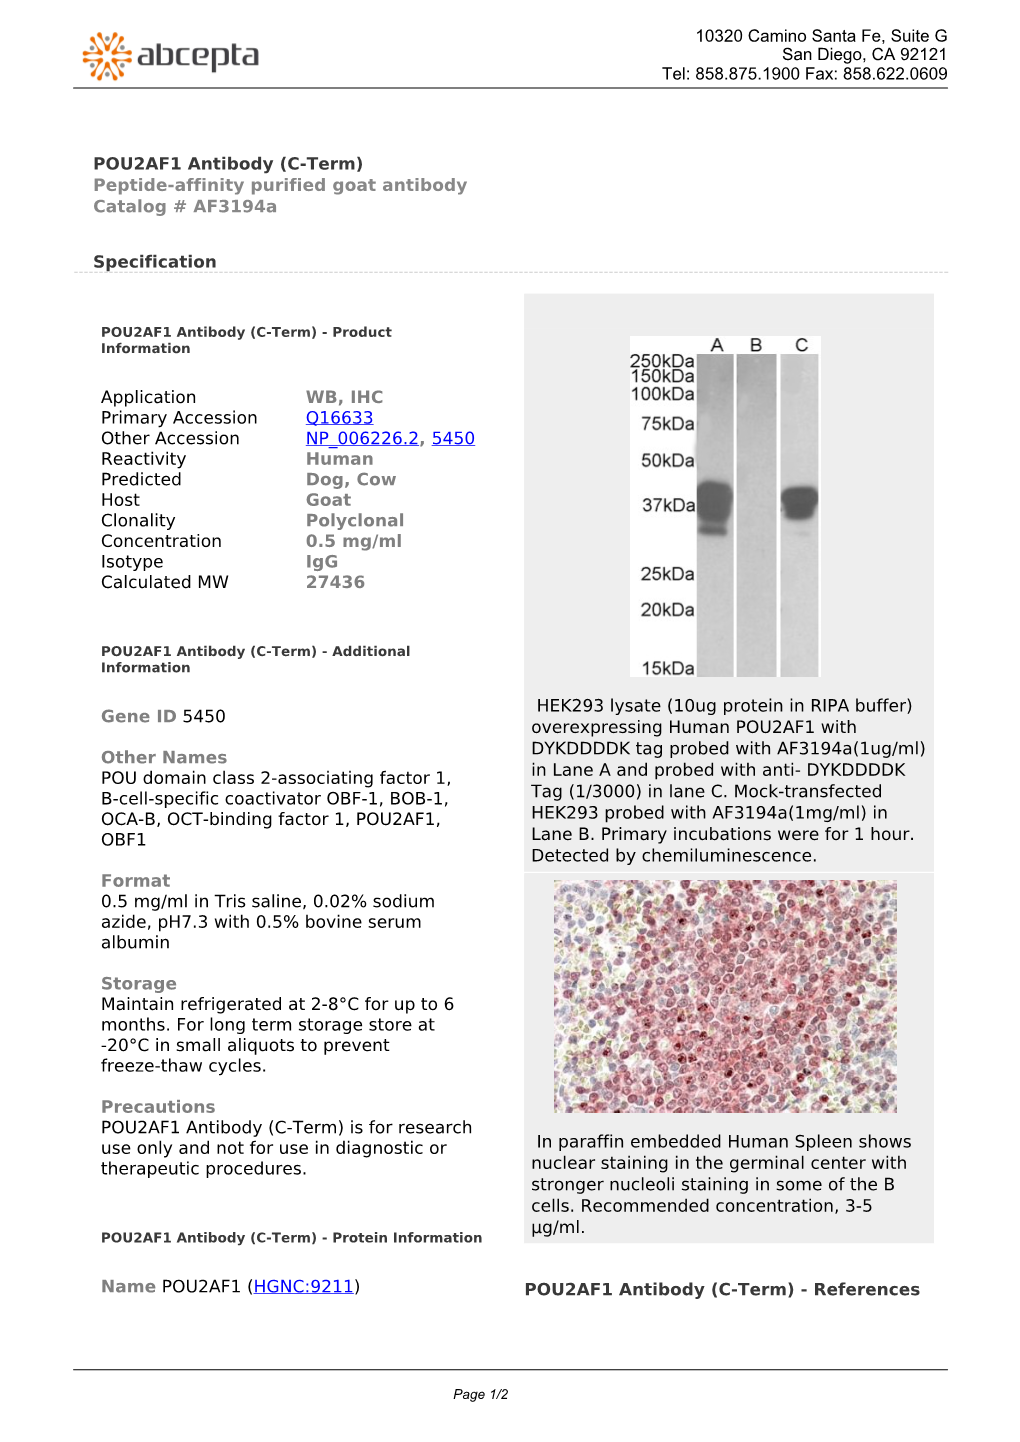 POU2AF1 Antibody (C-Term) Peptide-Affinity Purified Goat Antibody Catalog # Af3194a